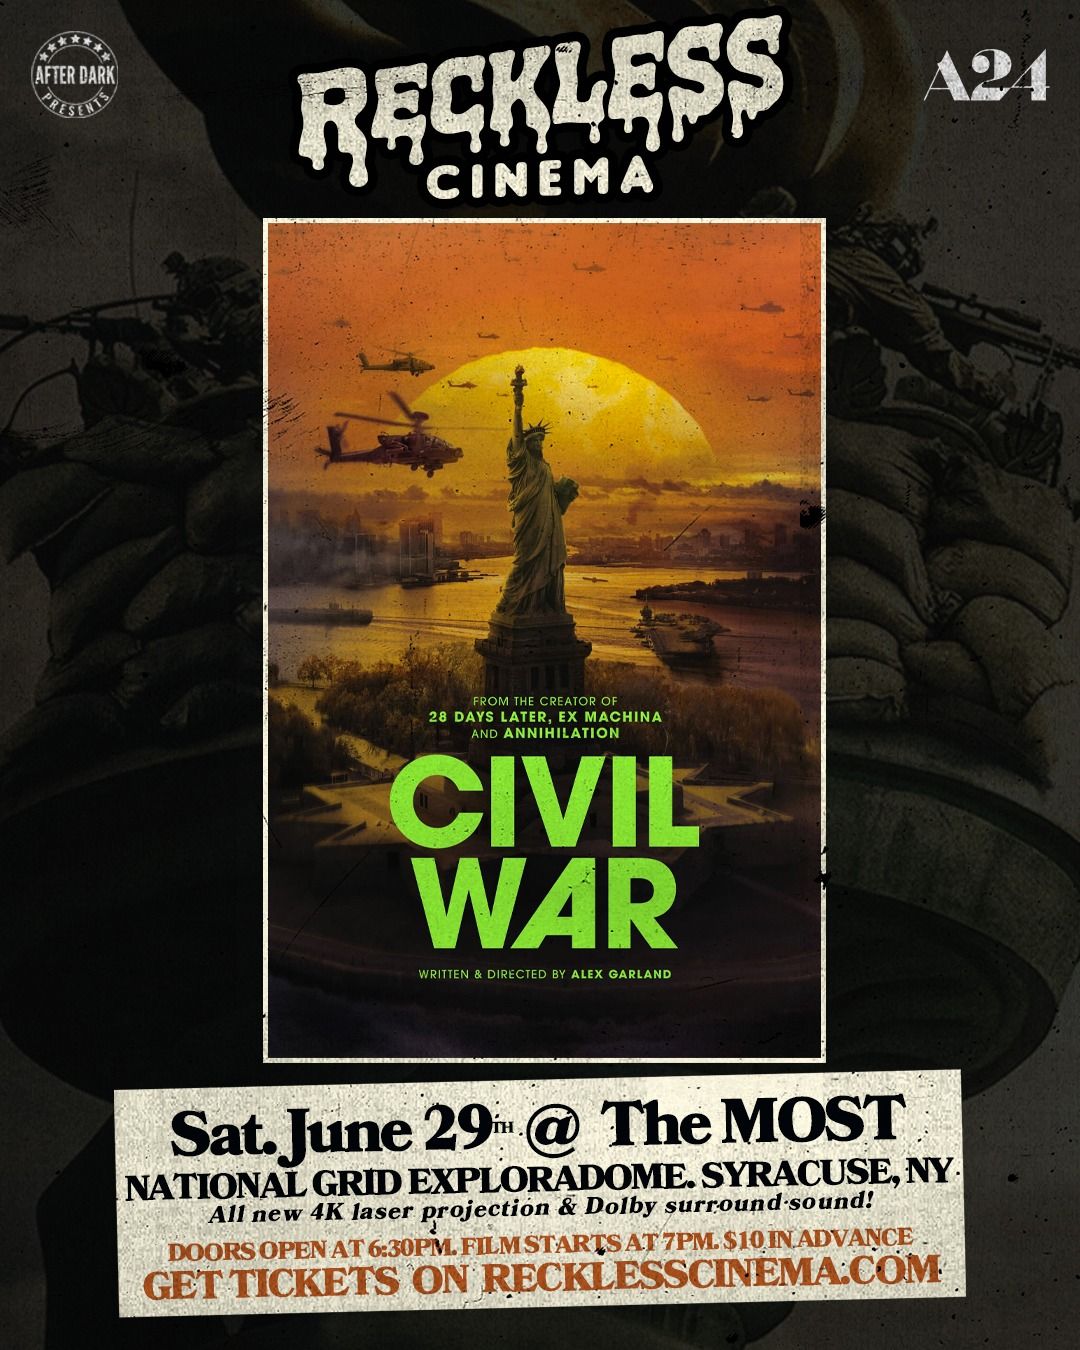 Civil War: Film Screening - June 29 at National Grid Exploradome at The MOST